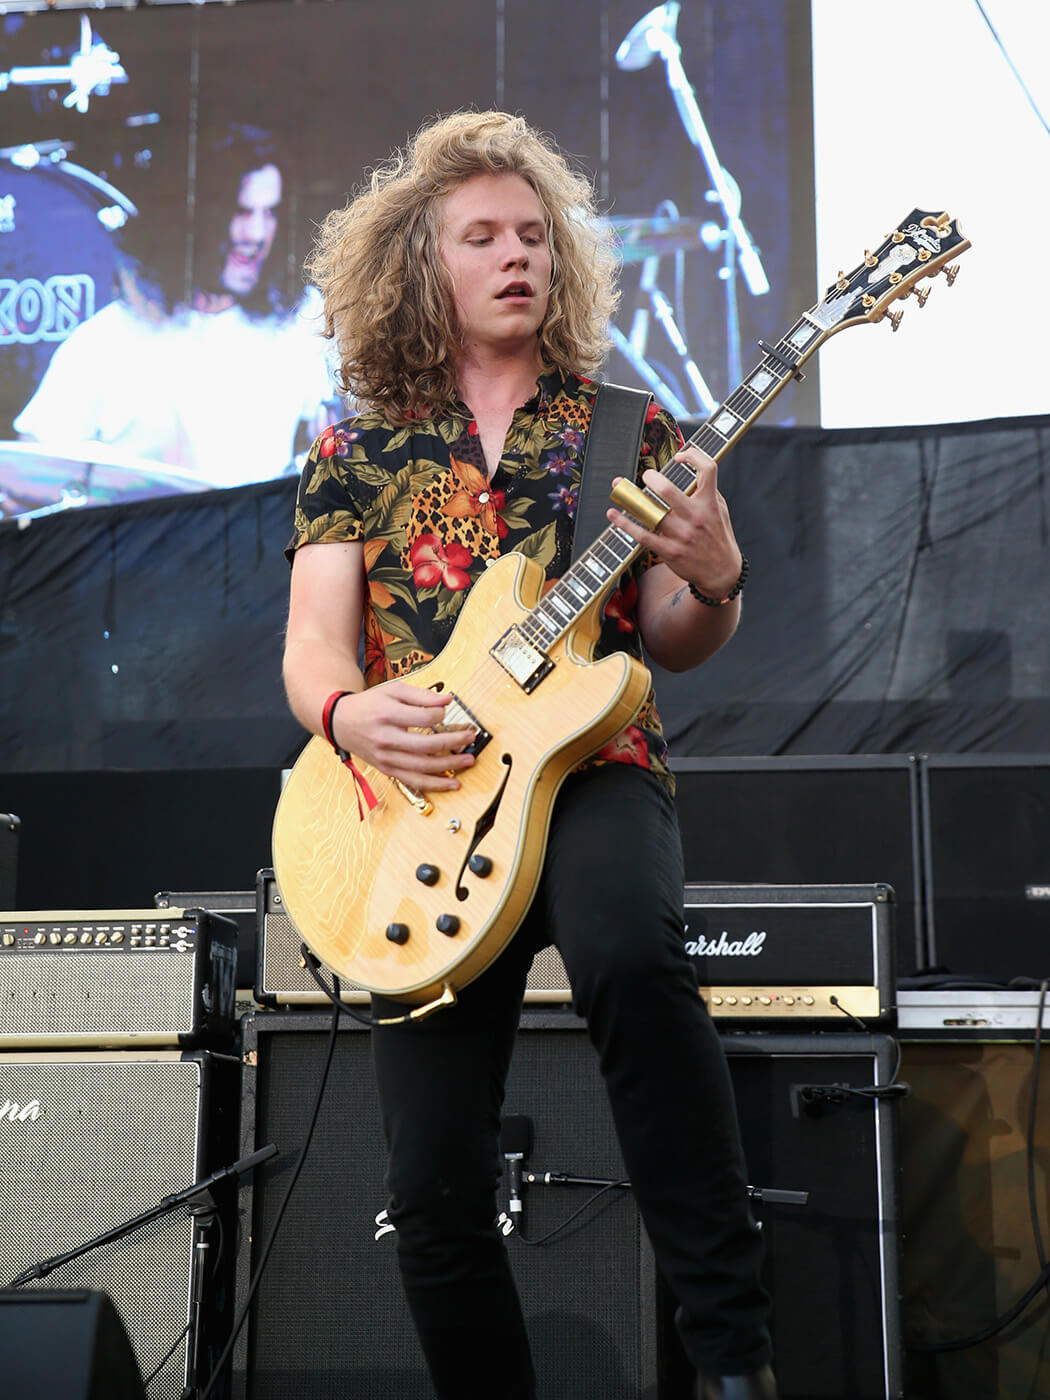 Blake Allard of Joyous Wolf performs during Las Rageous Music Festival at Downtown Las Vegas Events Center on April 21, 2018 in Las Vegas, Nevada.